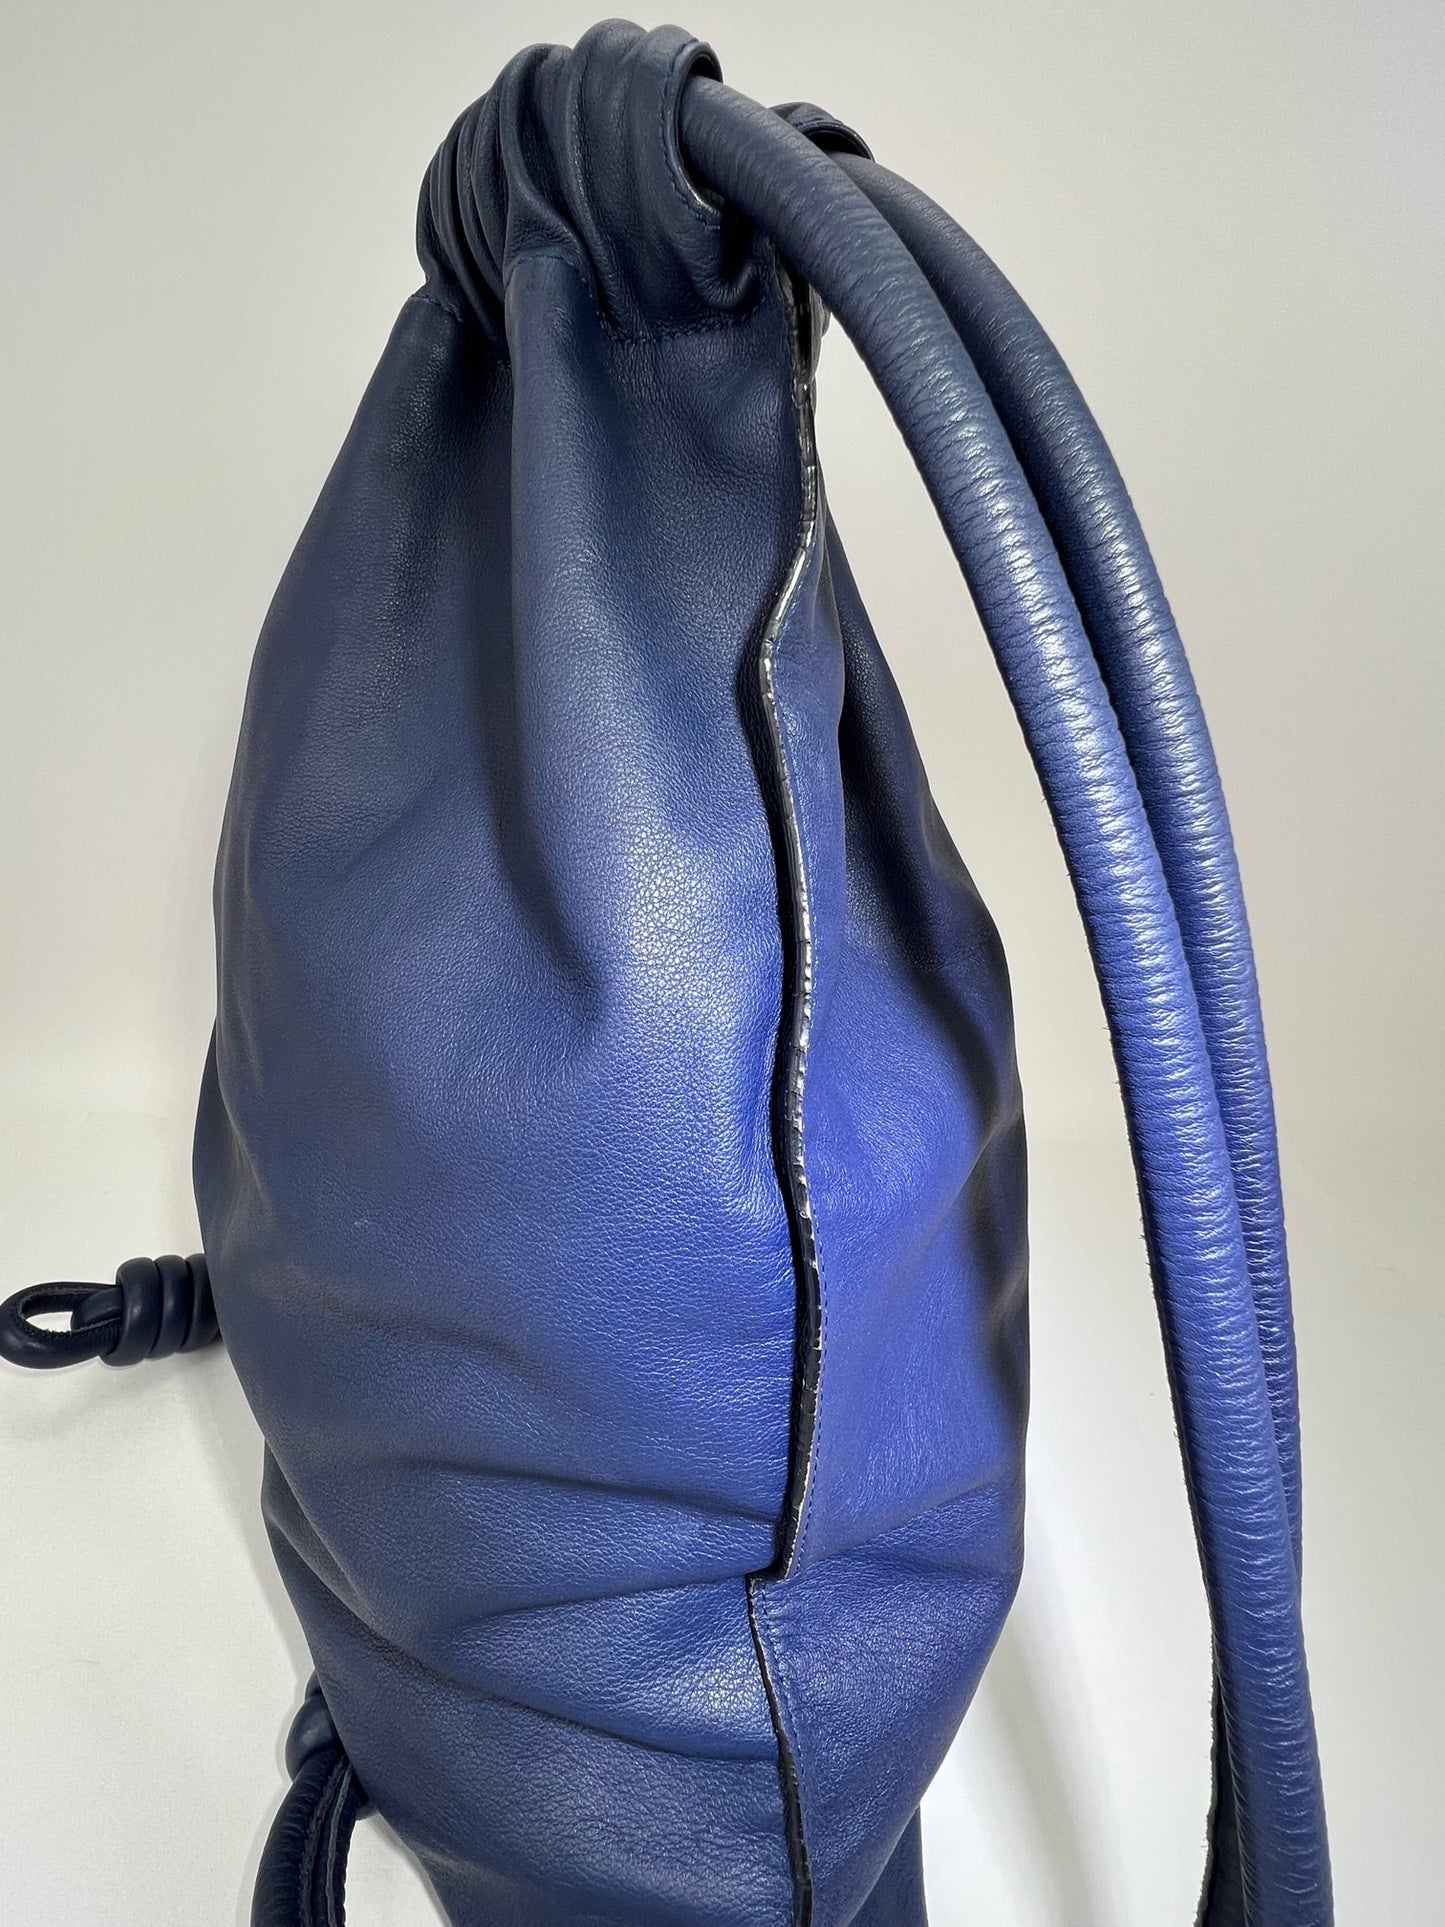 Real vs Fake Zara backpack. How to spot counterfeit Zara bags 